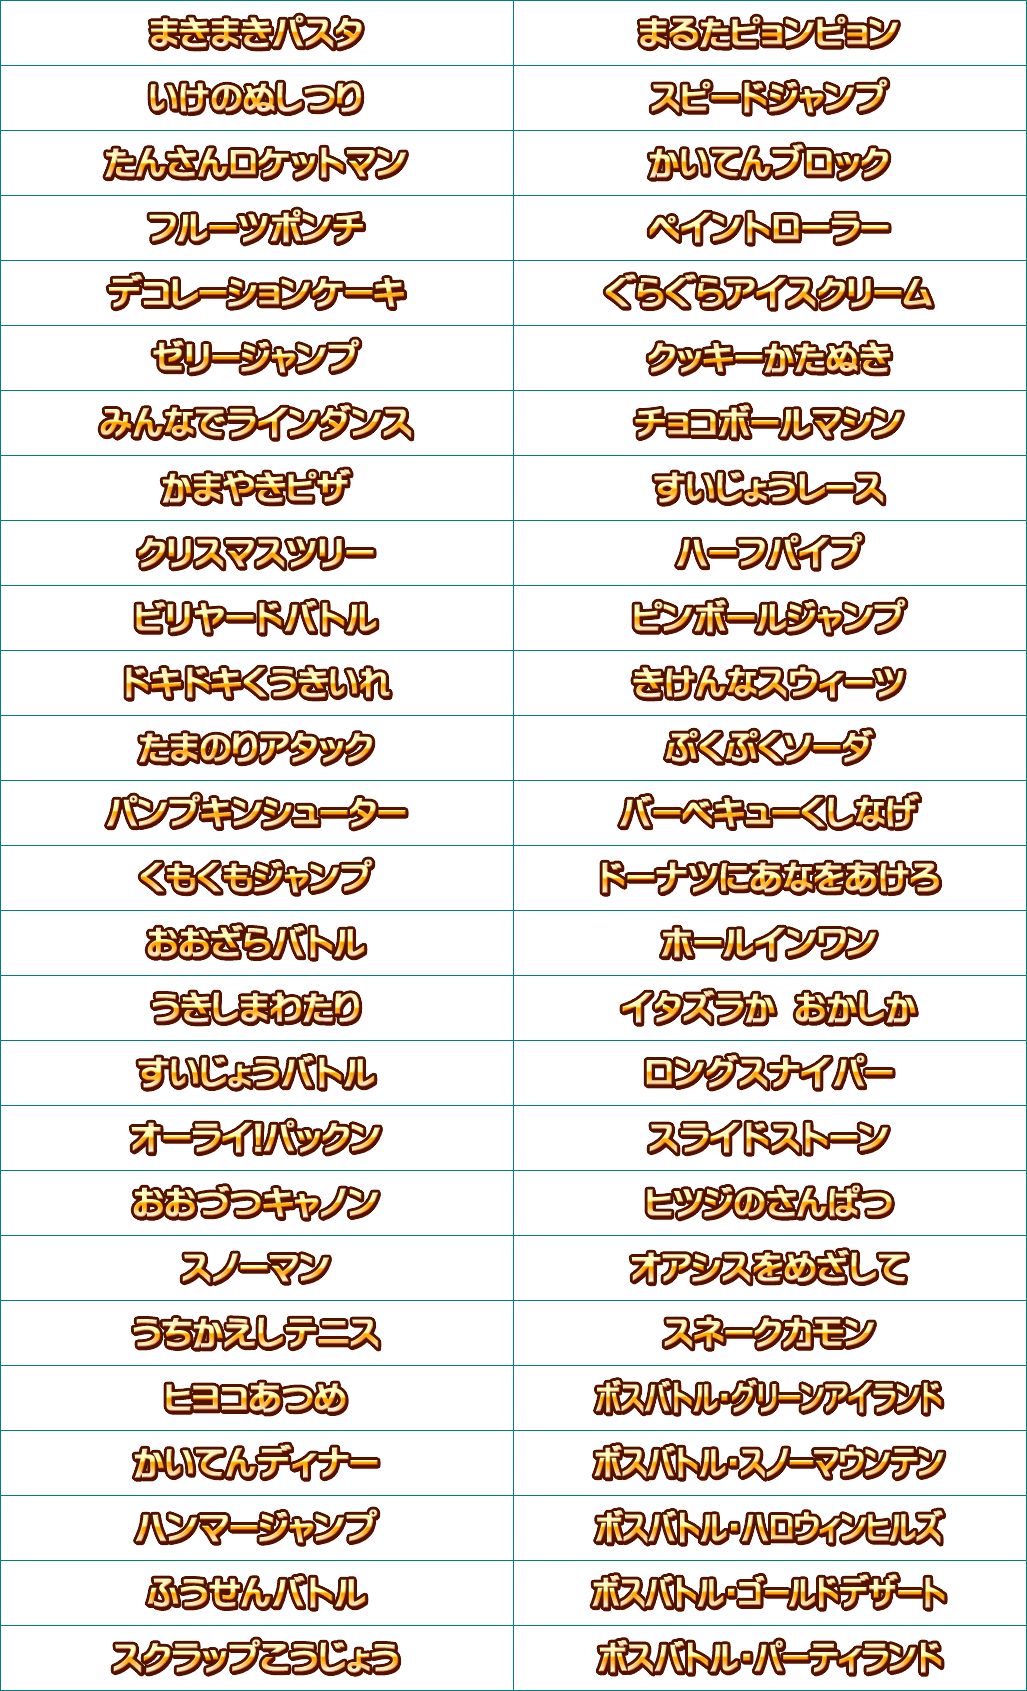 Minigame Names (Japanese)